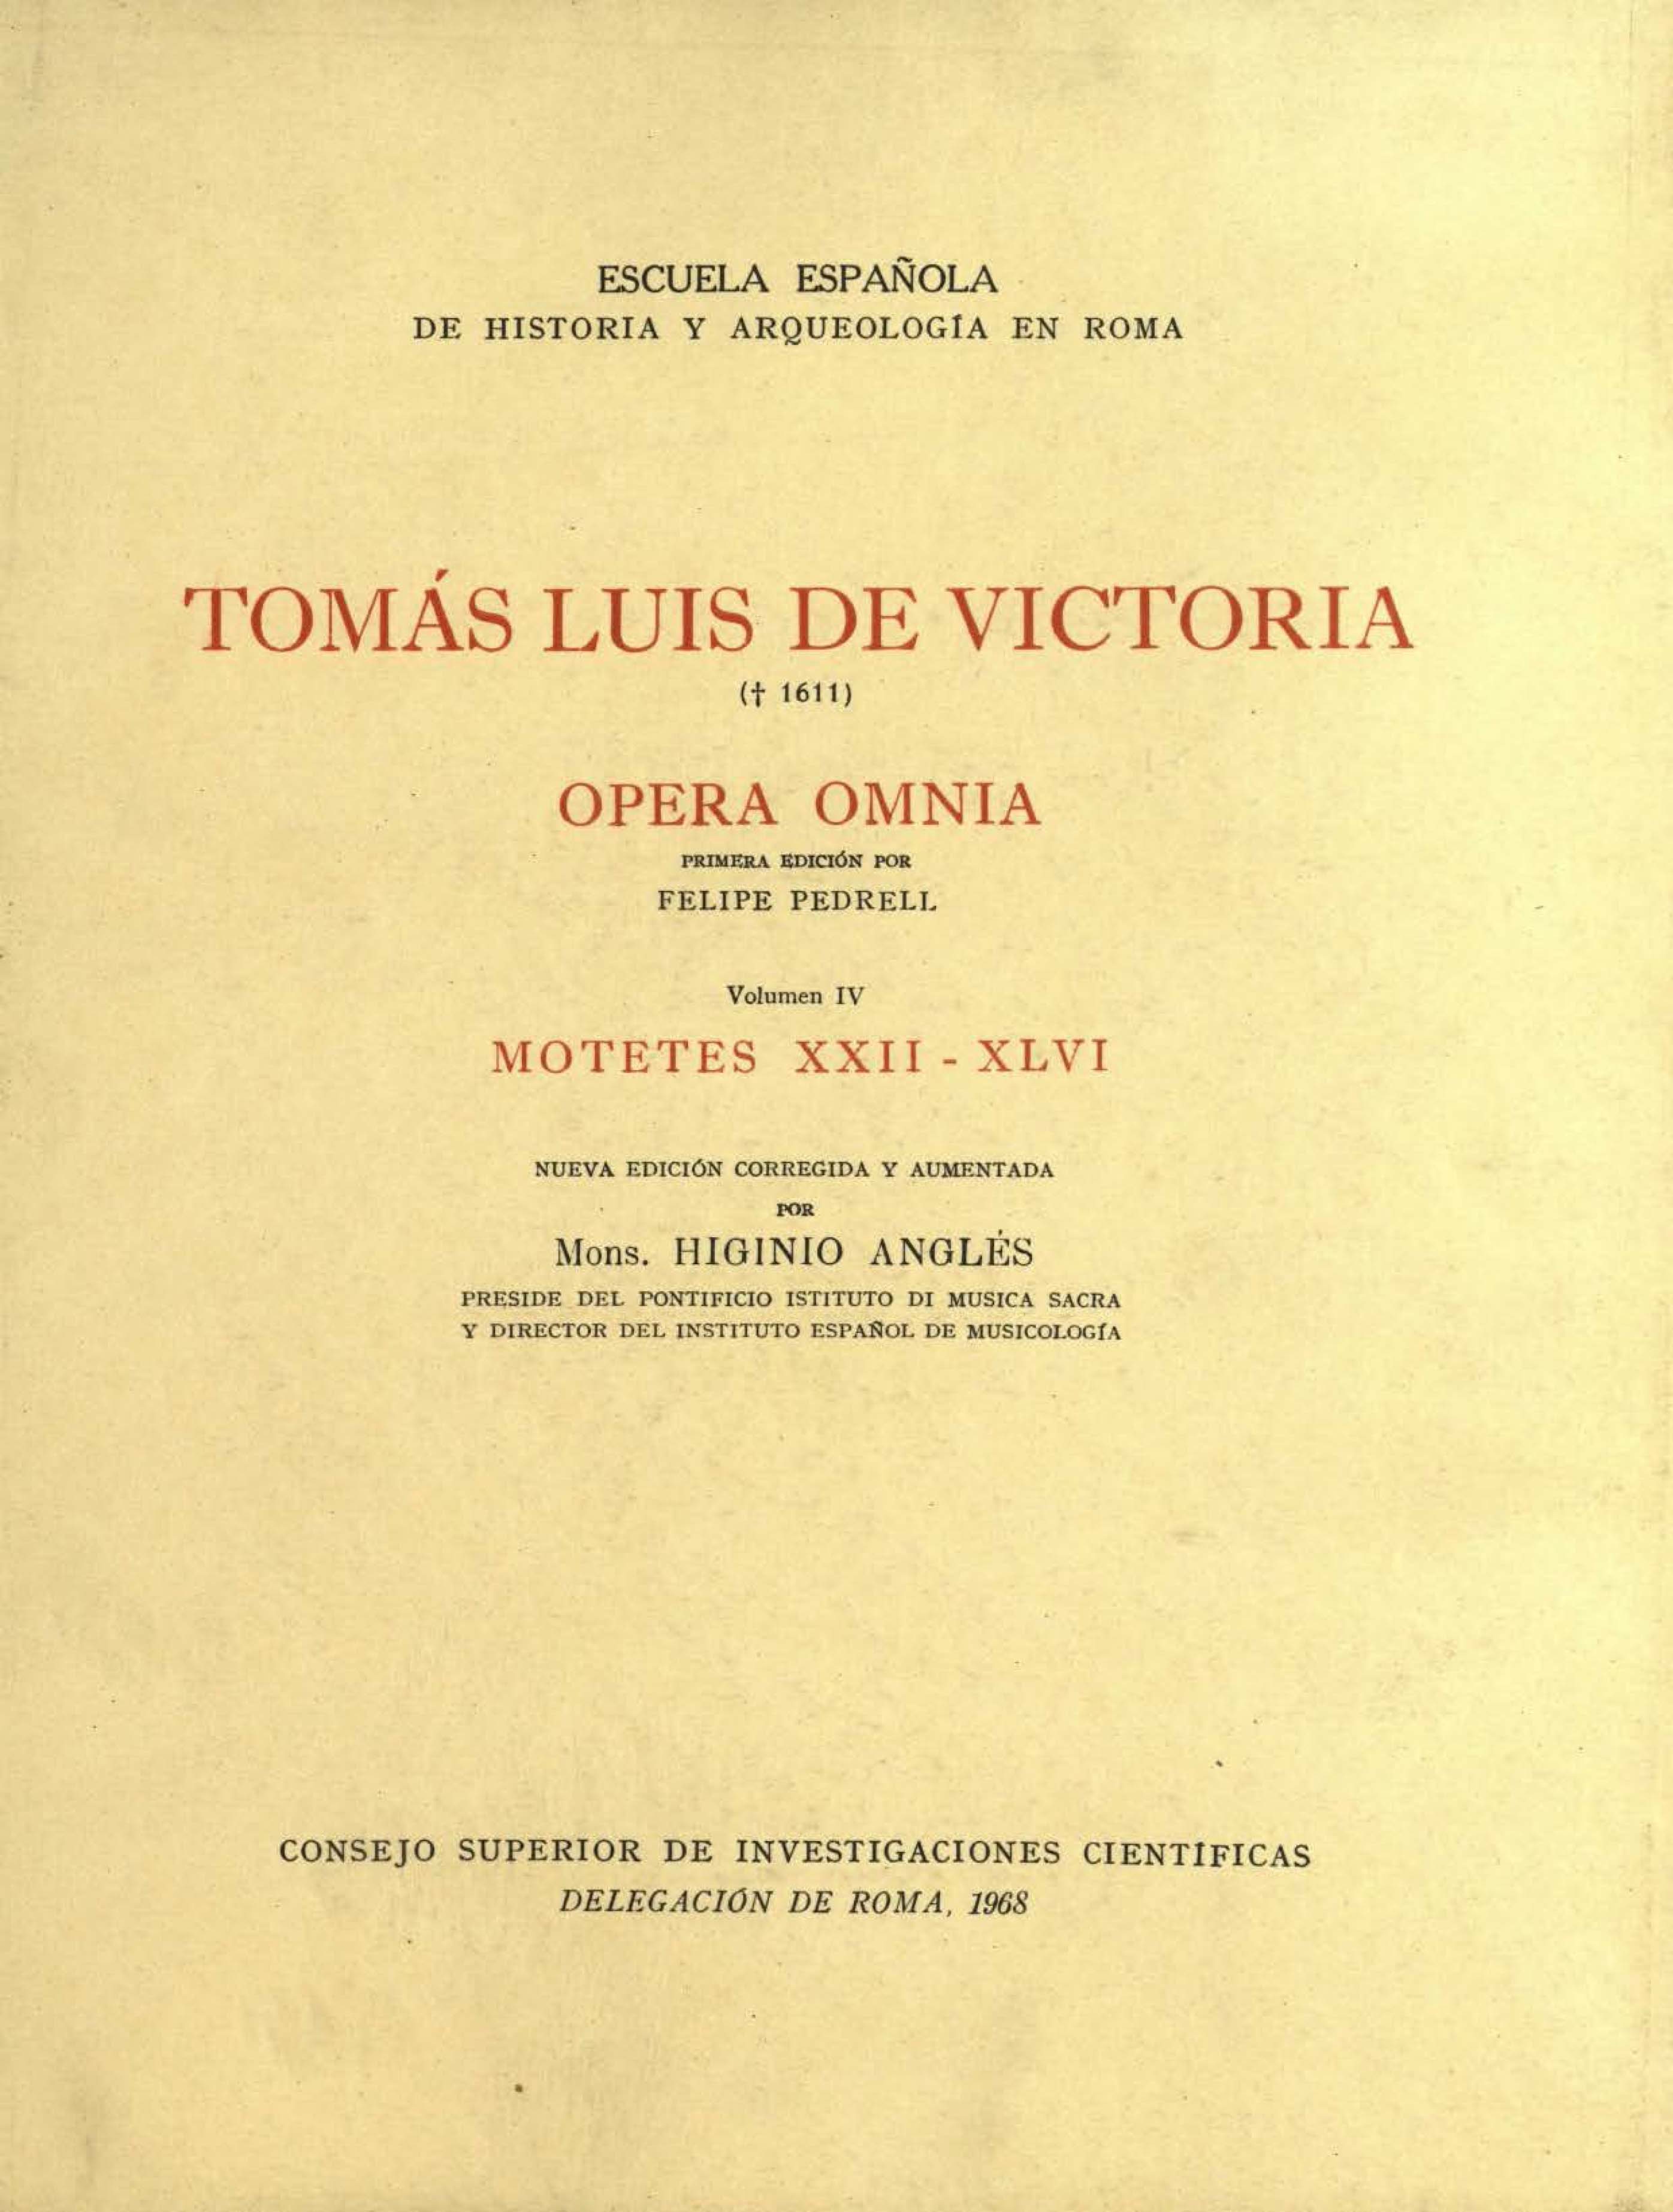 Tomás Luis de Victoria († 1611). Opera Omnia. Volumen IV. Motetes XXII-XLVI